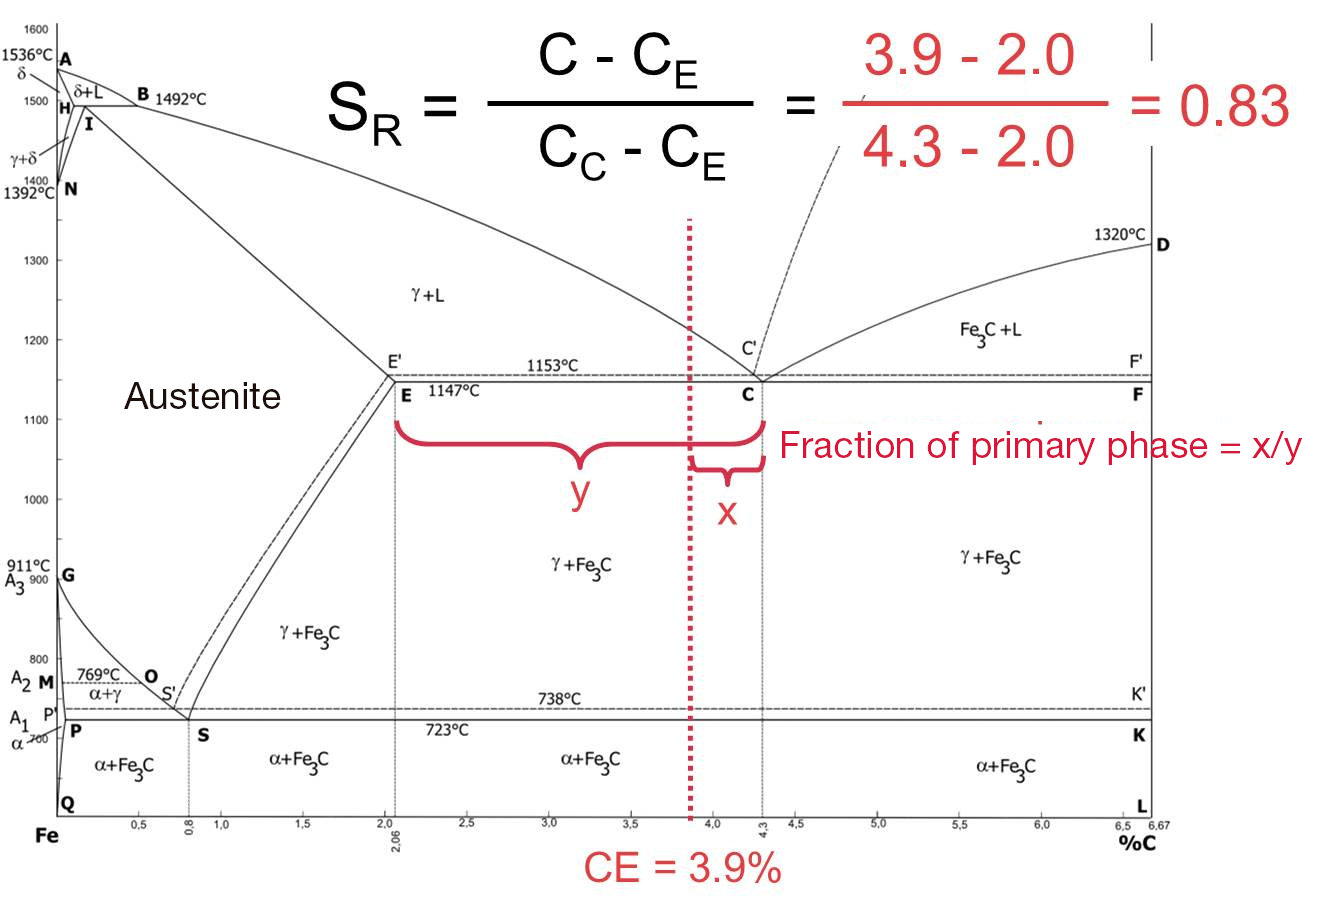 Eutectic fraction in the iron-carbon phase diagram (c) MAGMASOFT®